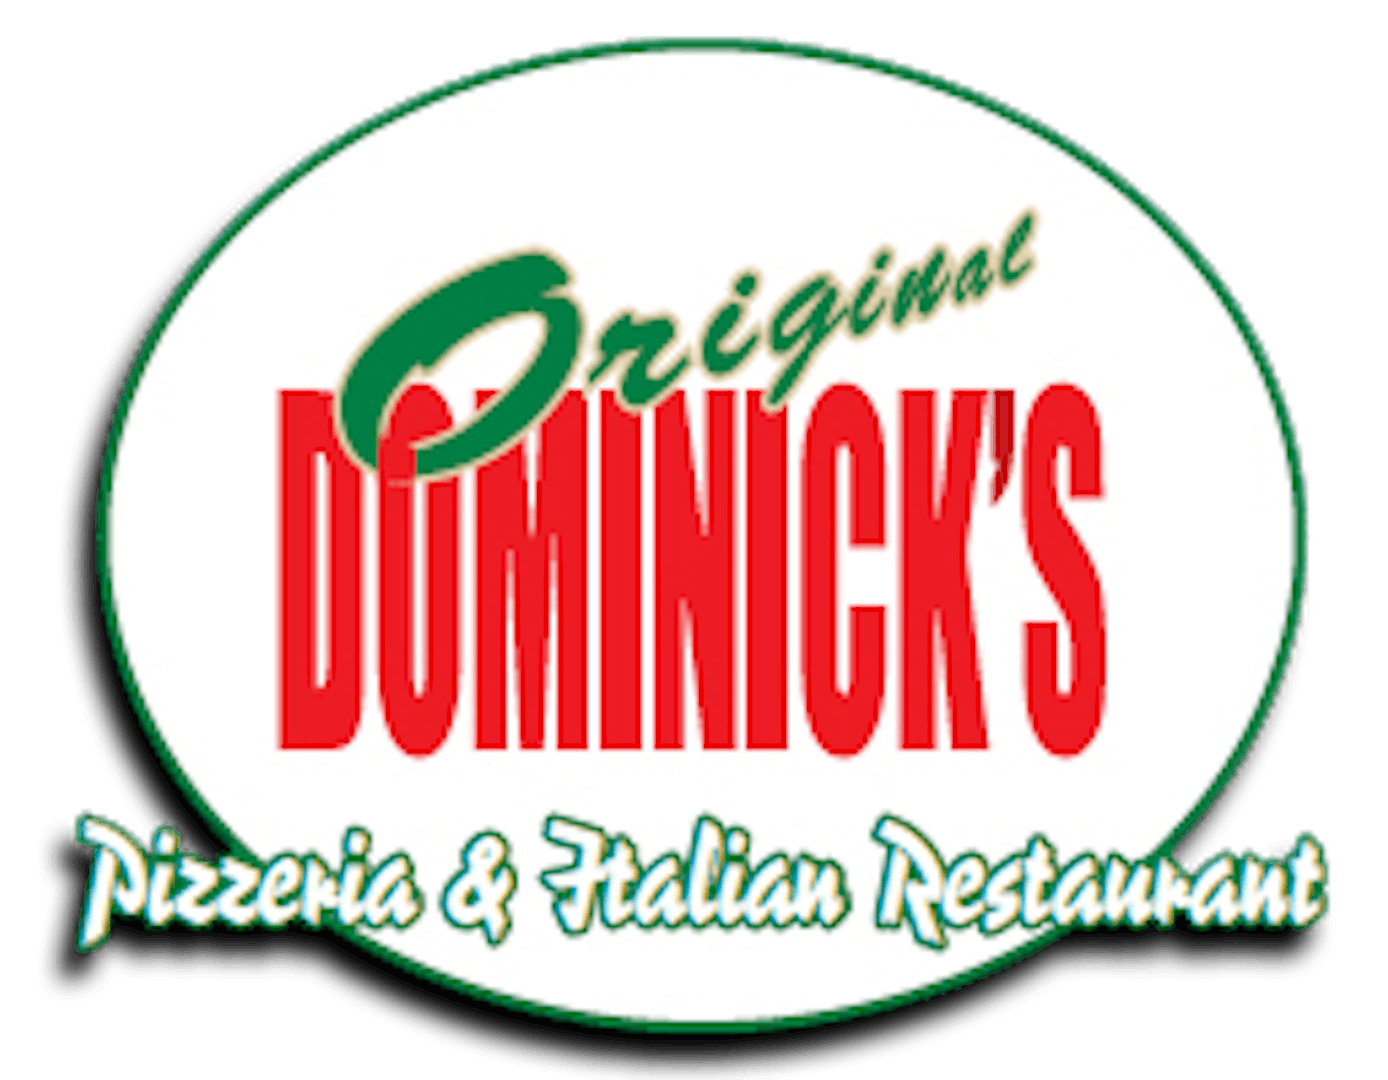 The Original Dominick's